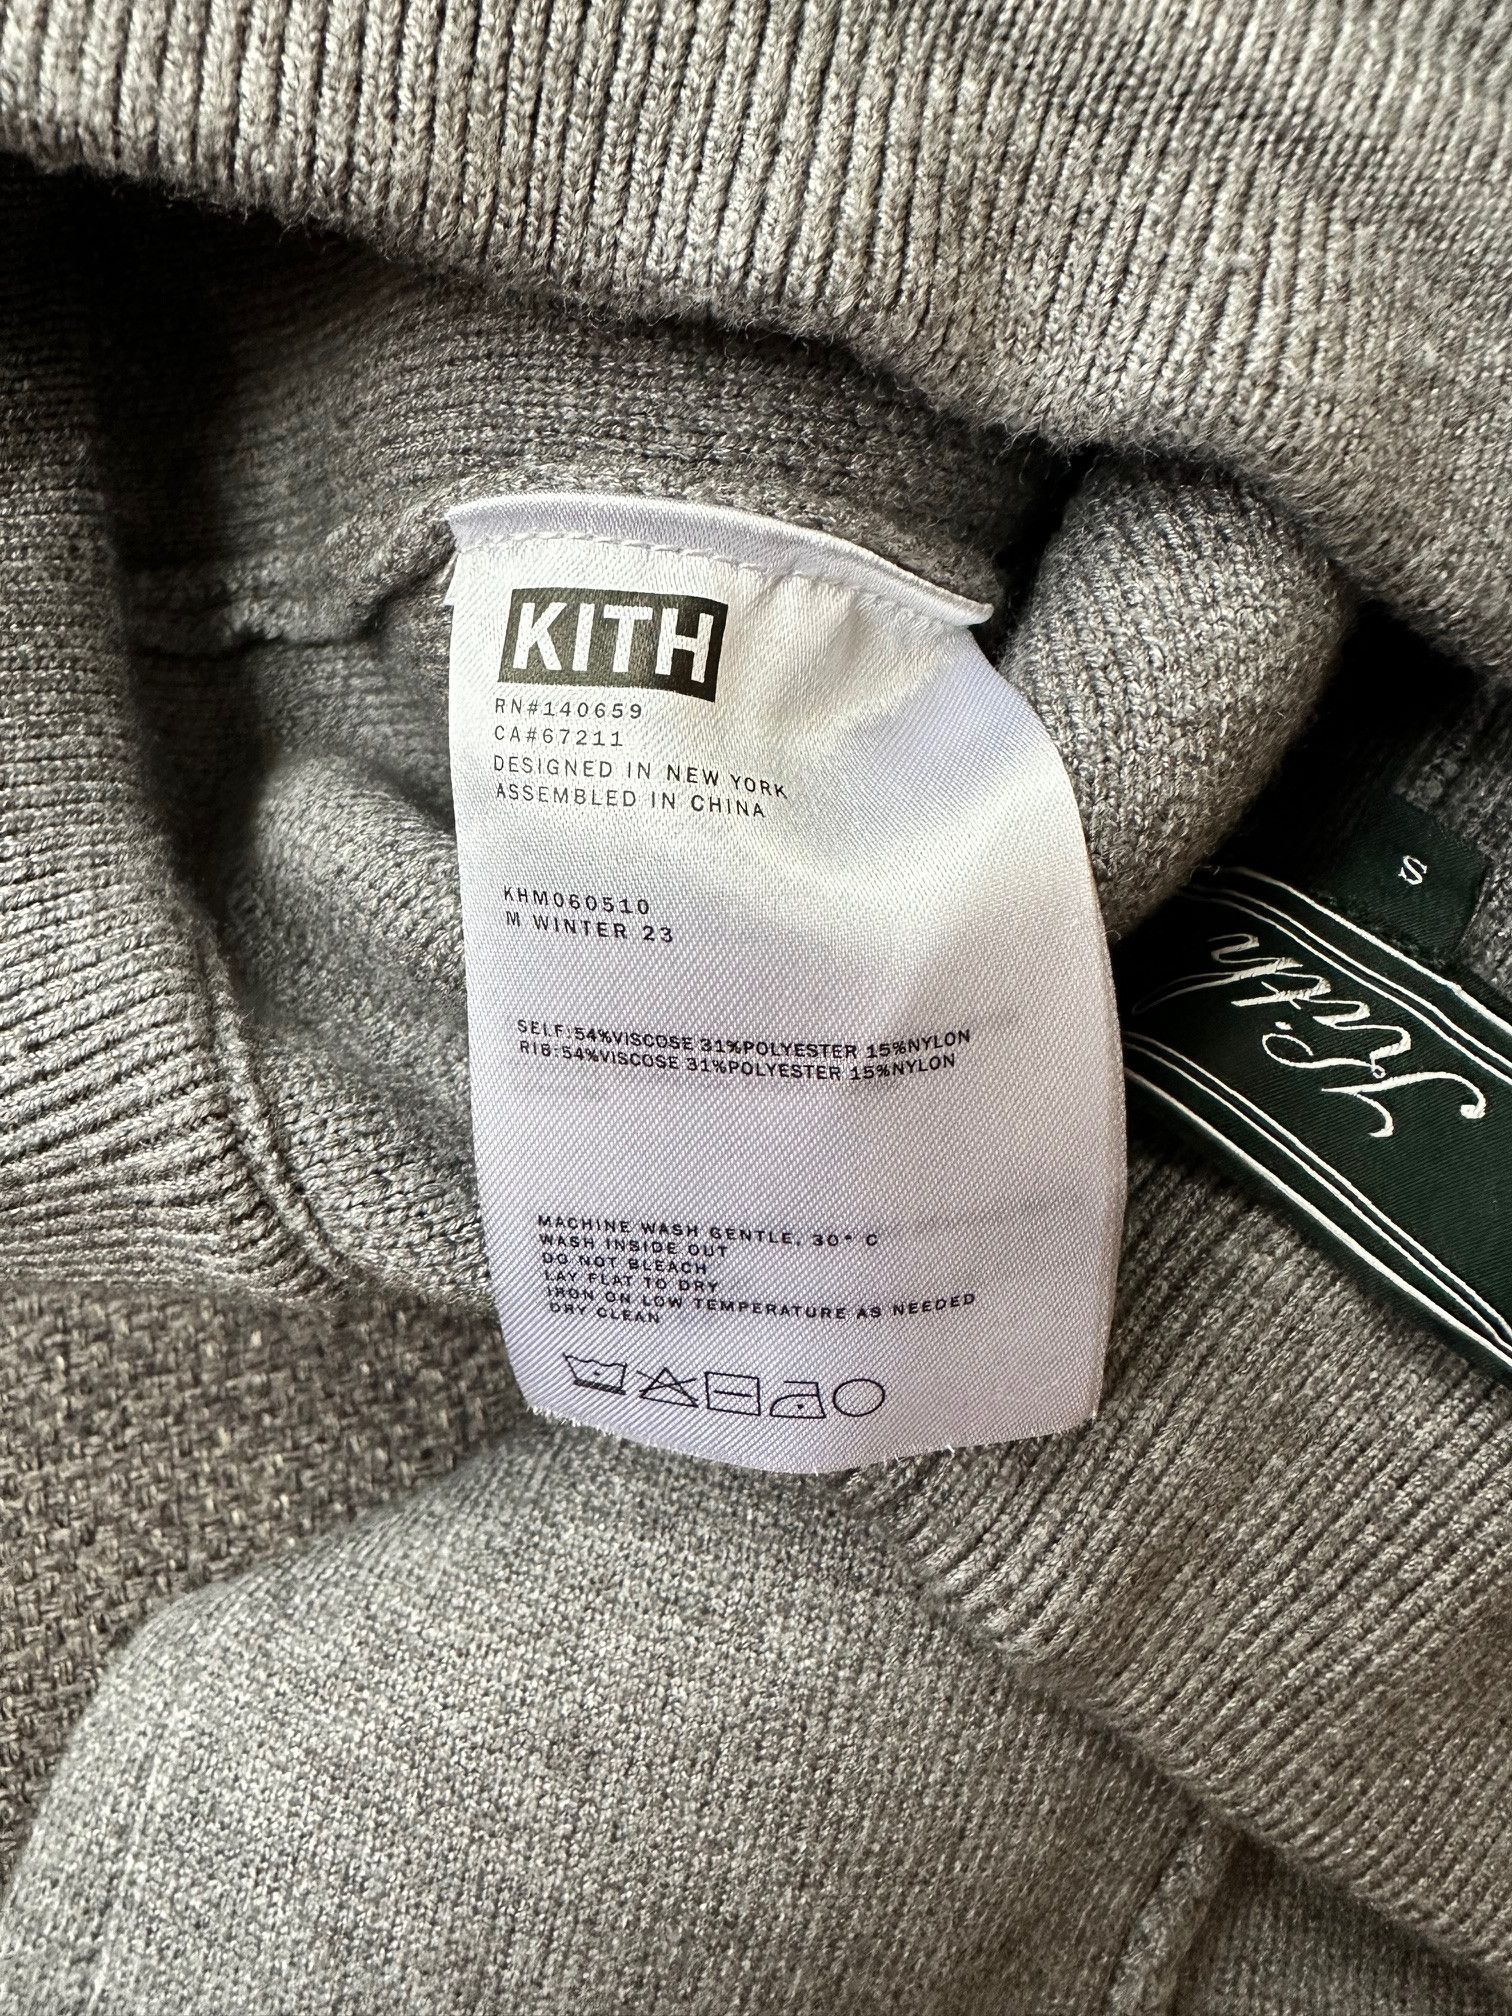 Kith Kith Heavy Knit Elwood Pant | Grailed